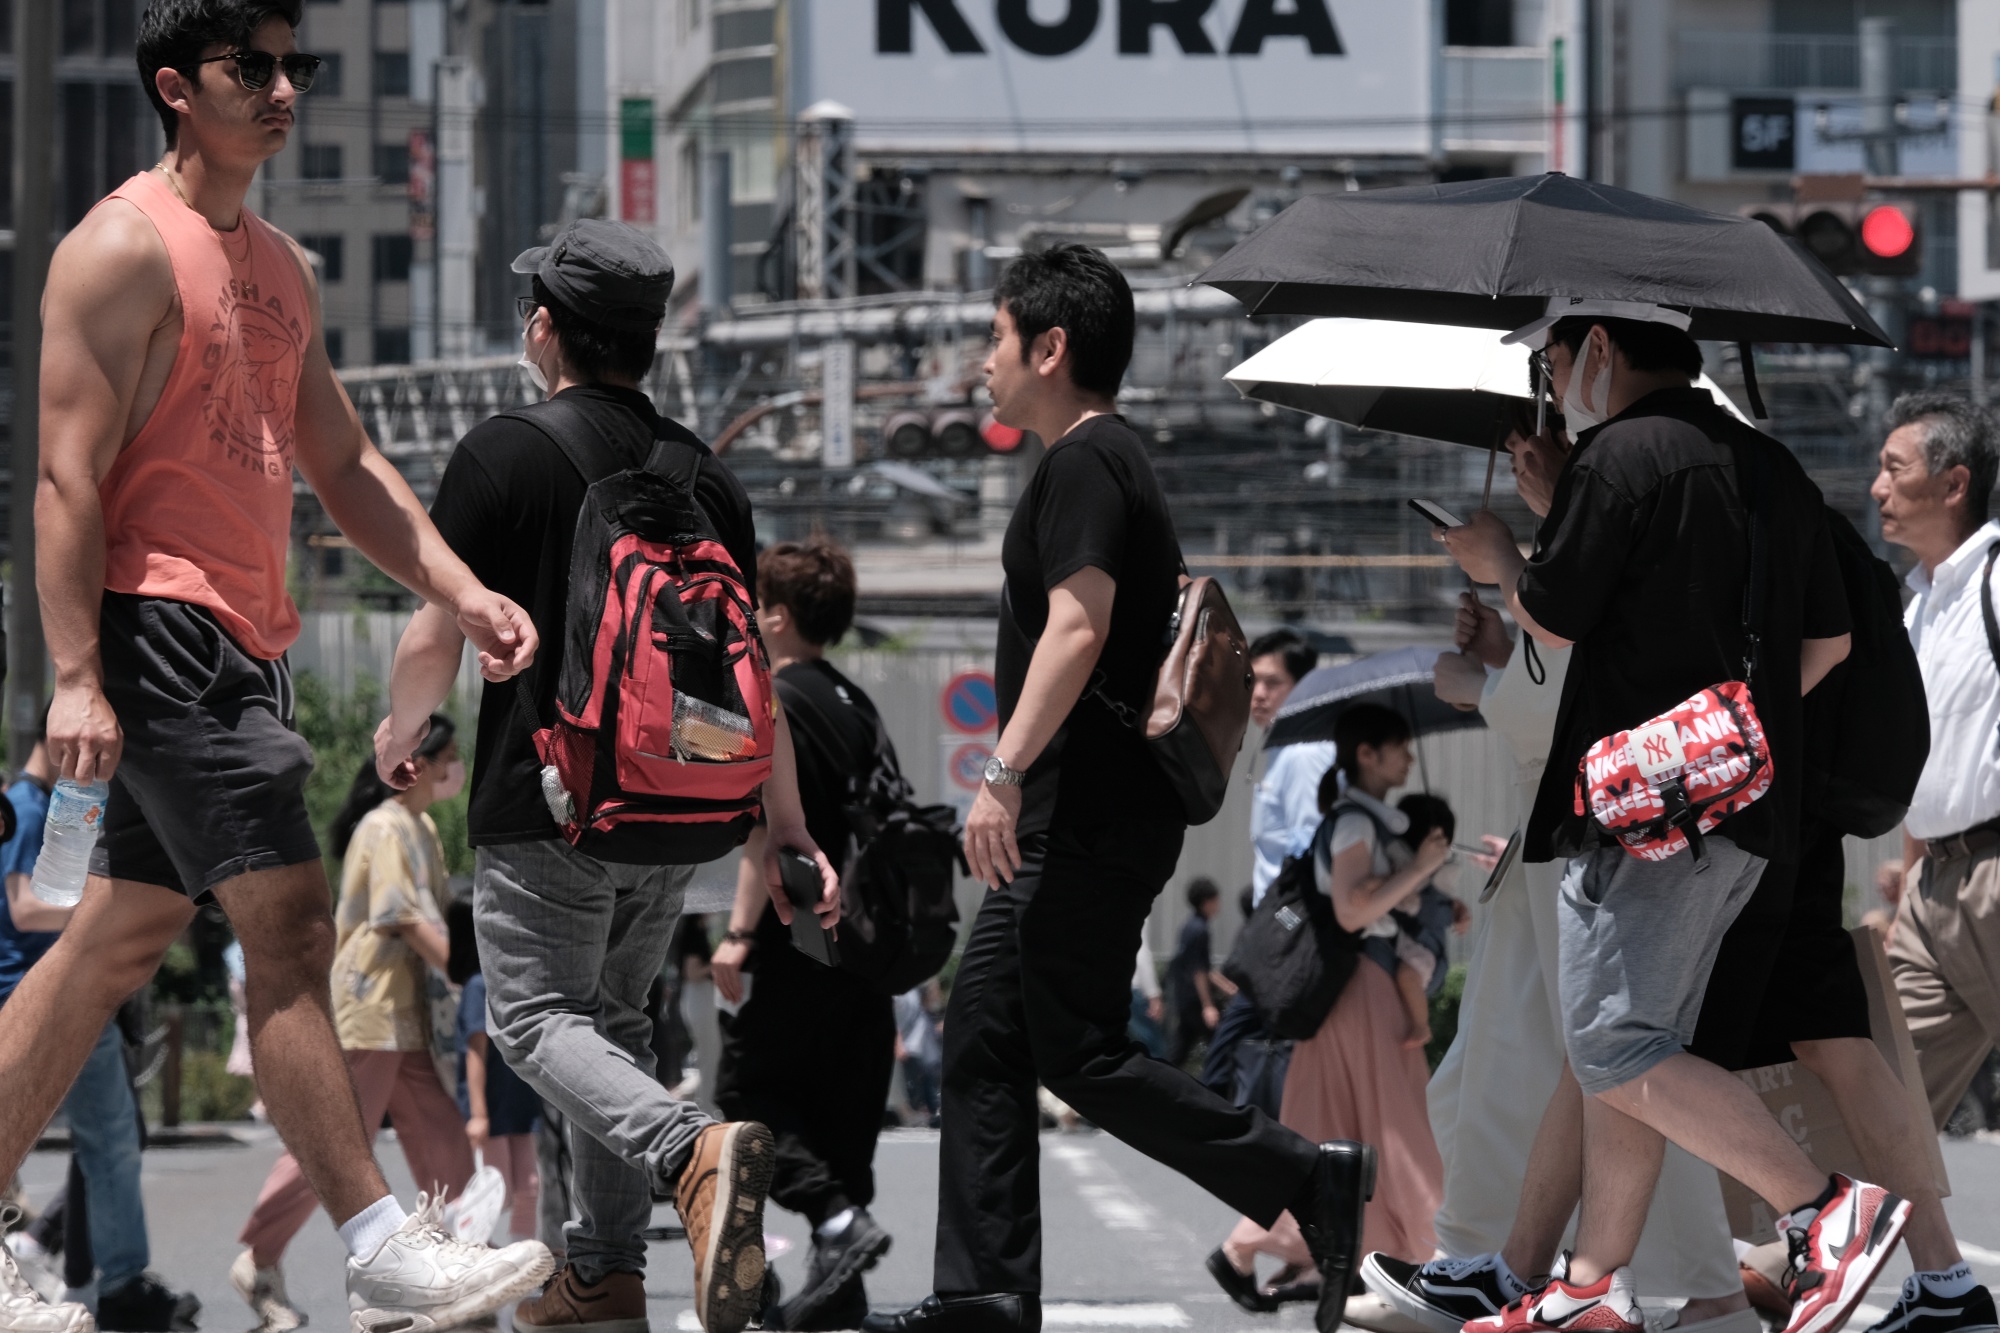 Capital Gains: People Across Japan Keep Moving to Tokyo